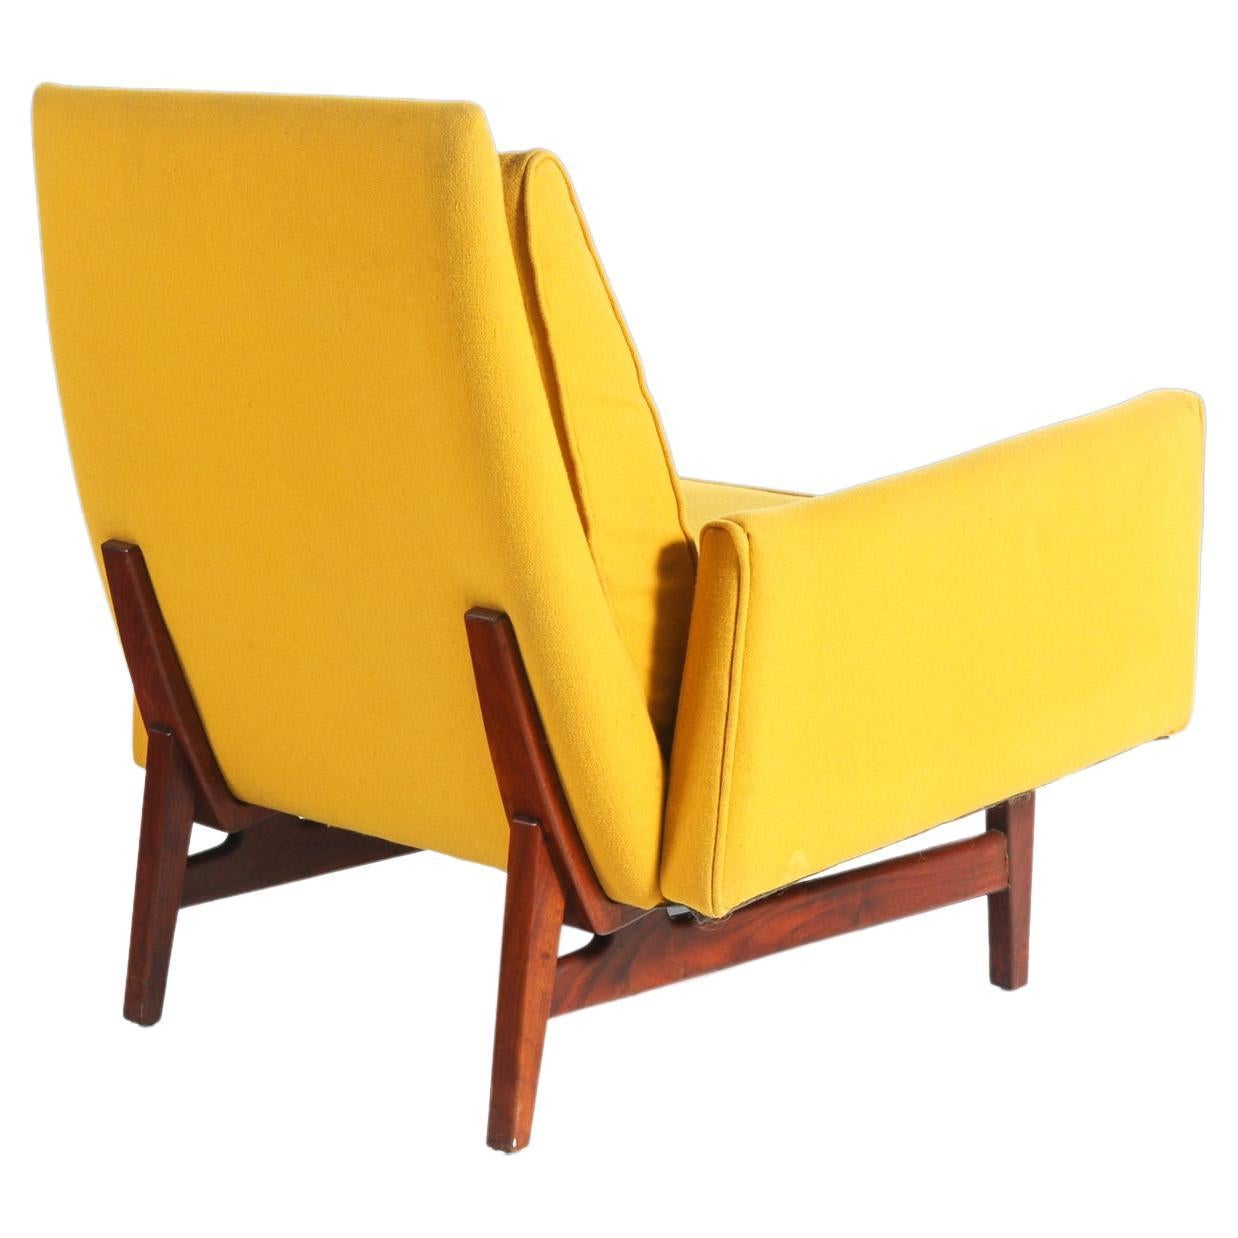 Jens Risom Model No. 2118 Walnut Lounge Chair in Original Upholstery, c. 1960's